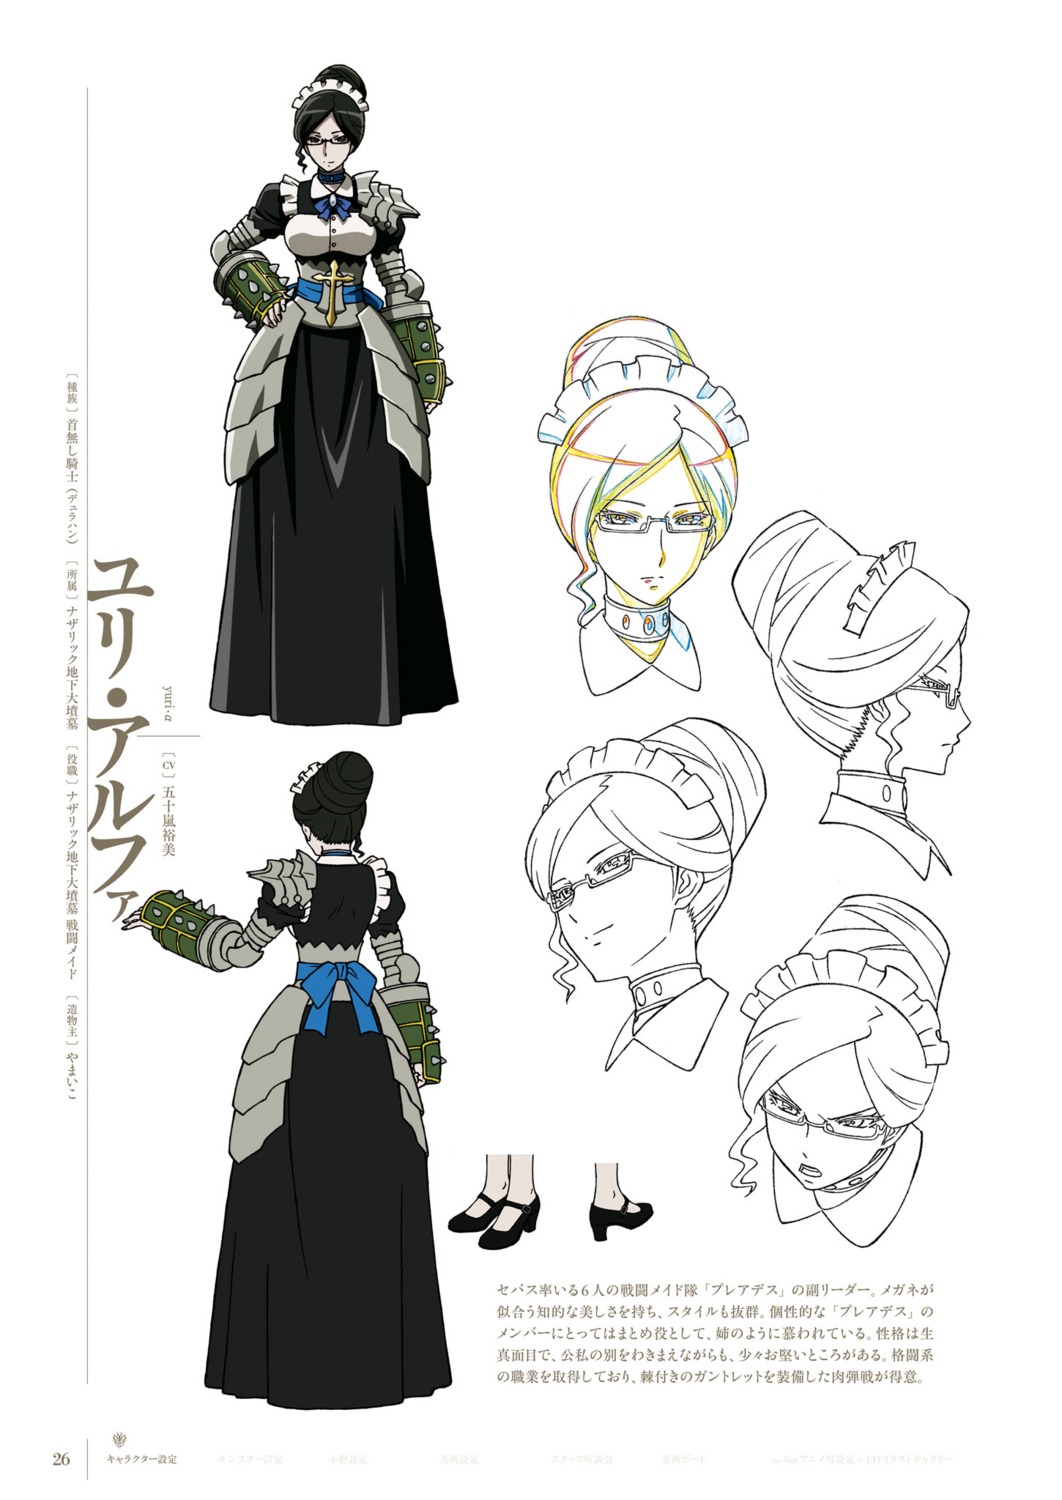 armor maid overlord sketch yuri_alpha